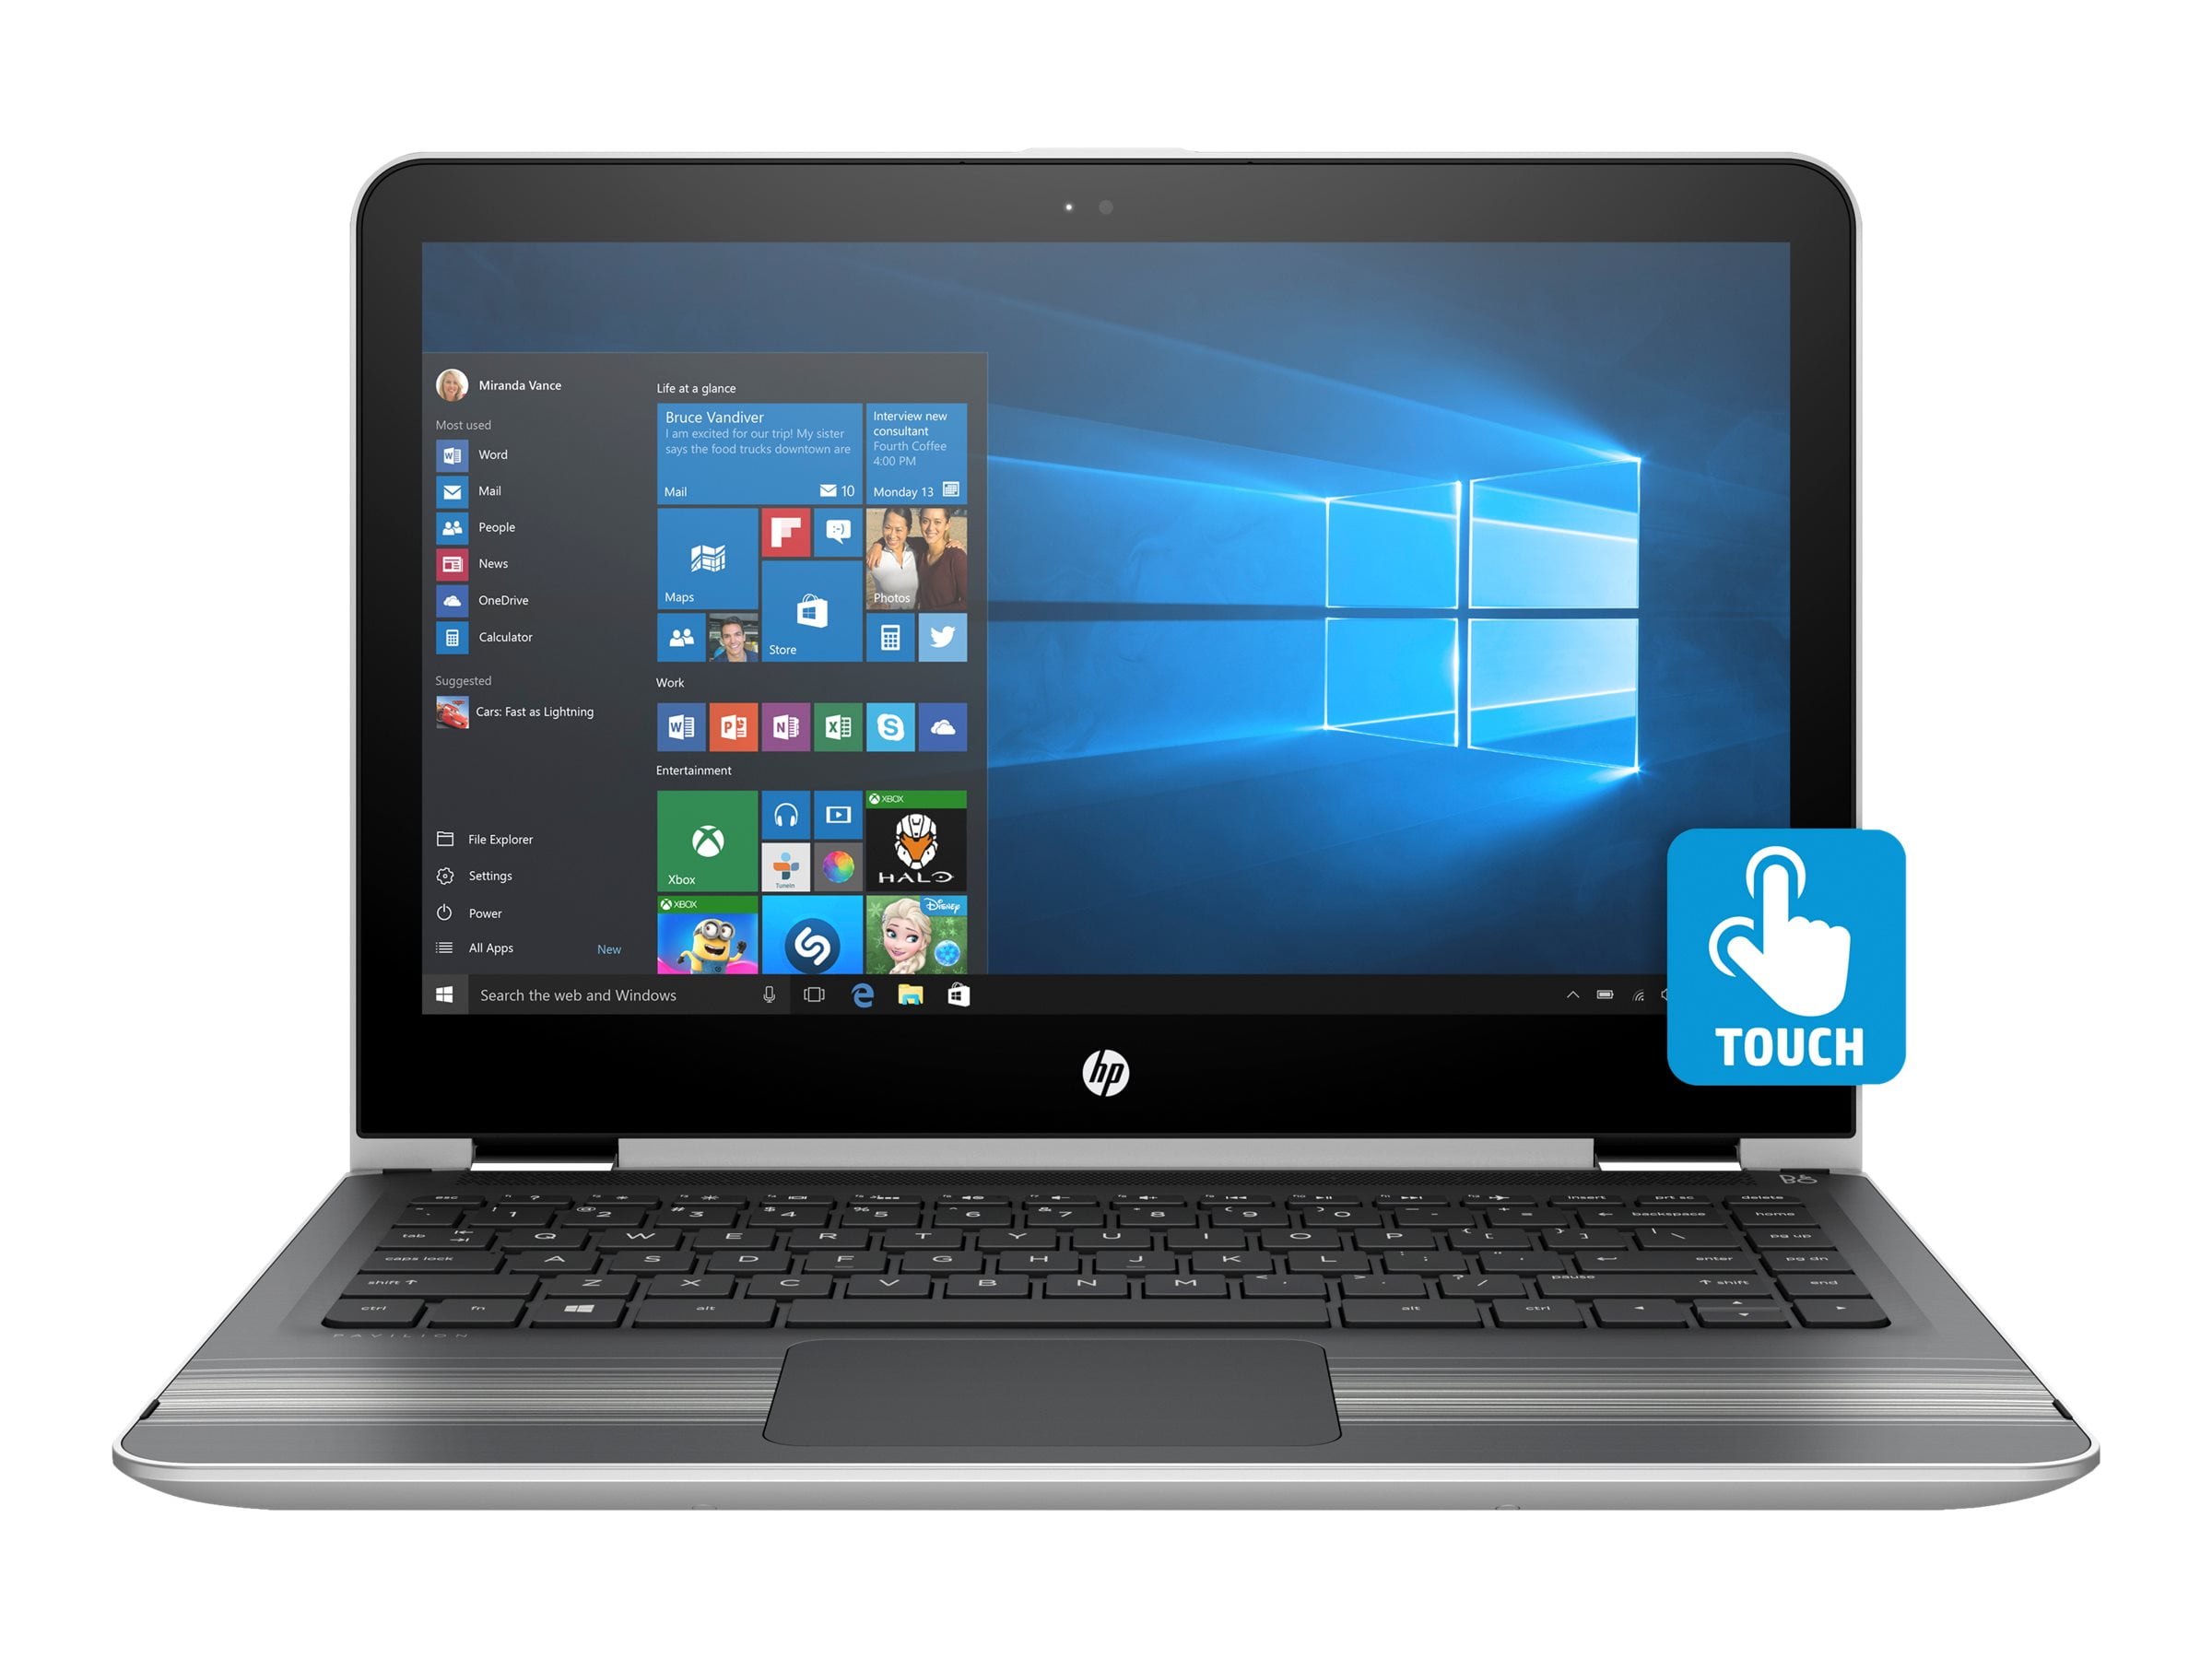 HP Pavilion x360 Laptop m3-u101dx - Flip design - Intel Core i3 7100U / 2.4 - Win 10 Home 64-bit HD Graphics 620 - 6 GB - 500 GB